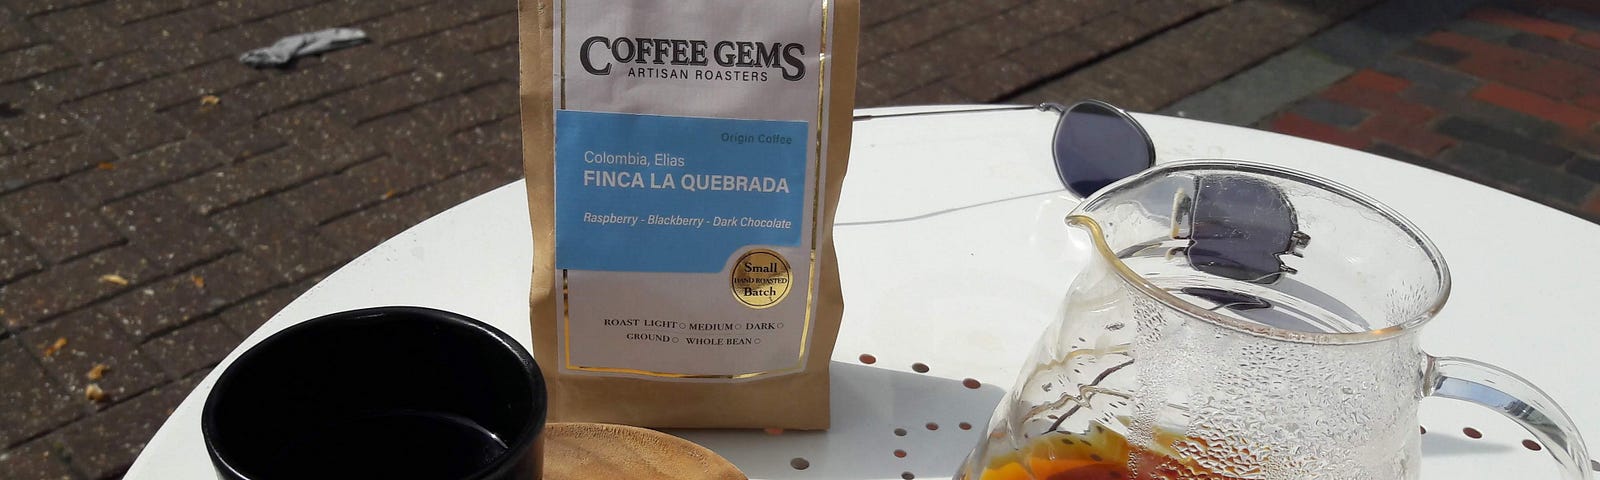 Finca la Quebrada roasted by Coffee Gems served as V60 at Blackbird